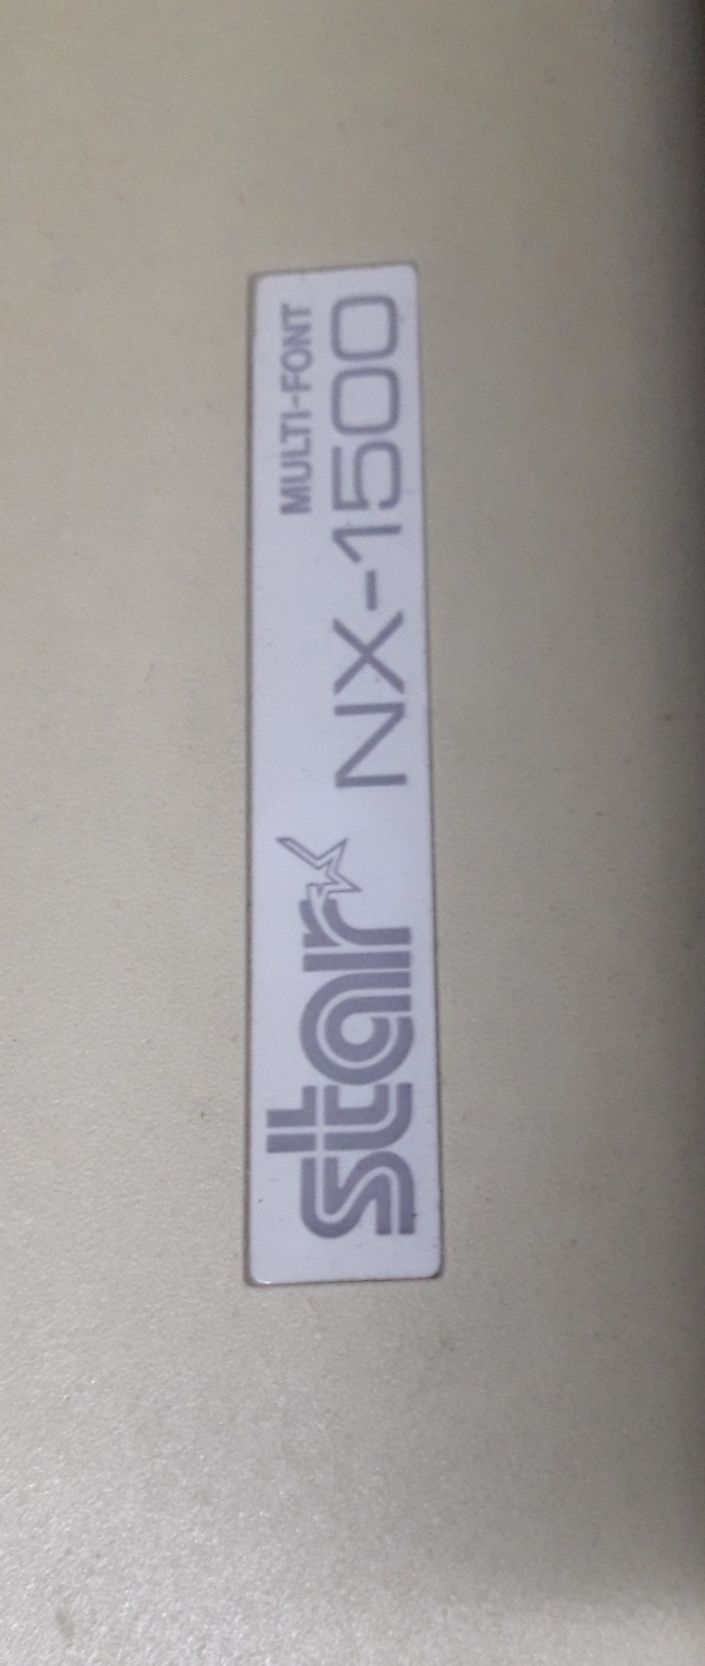 Принтер Star NX-1500 матричный А3